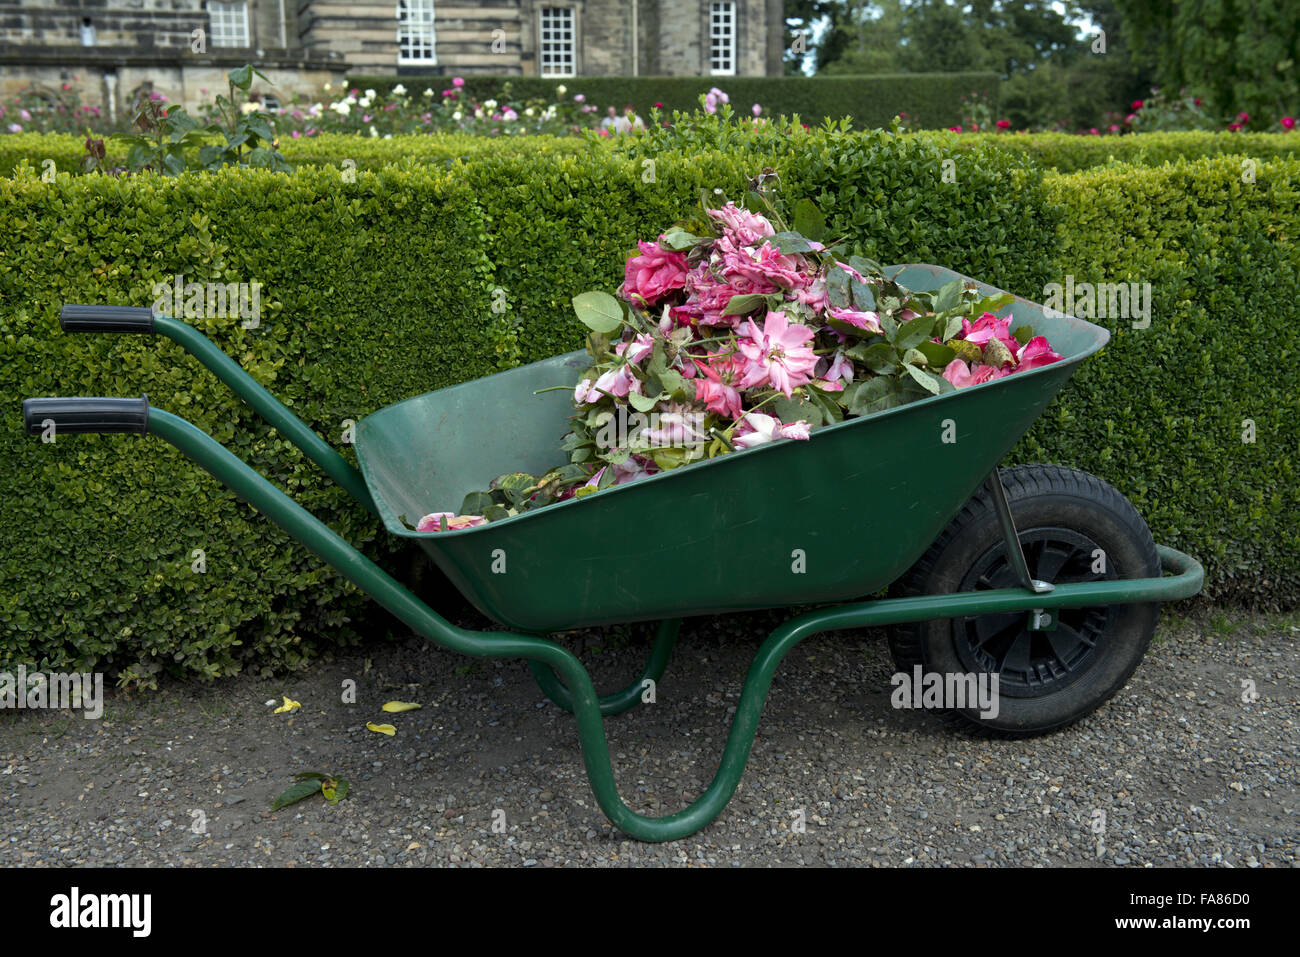 Deadheaded roses in a wheelbarrow in the garden at Seaton Delaval Hall, Northumberland. Stock Photo